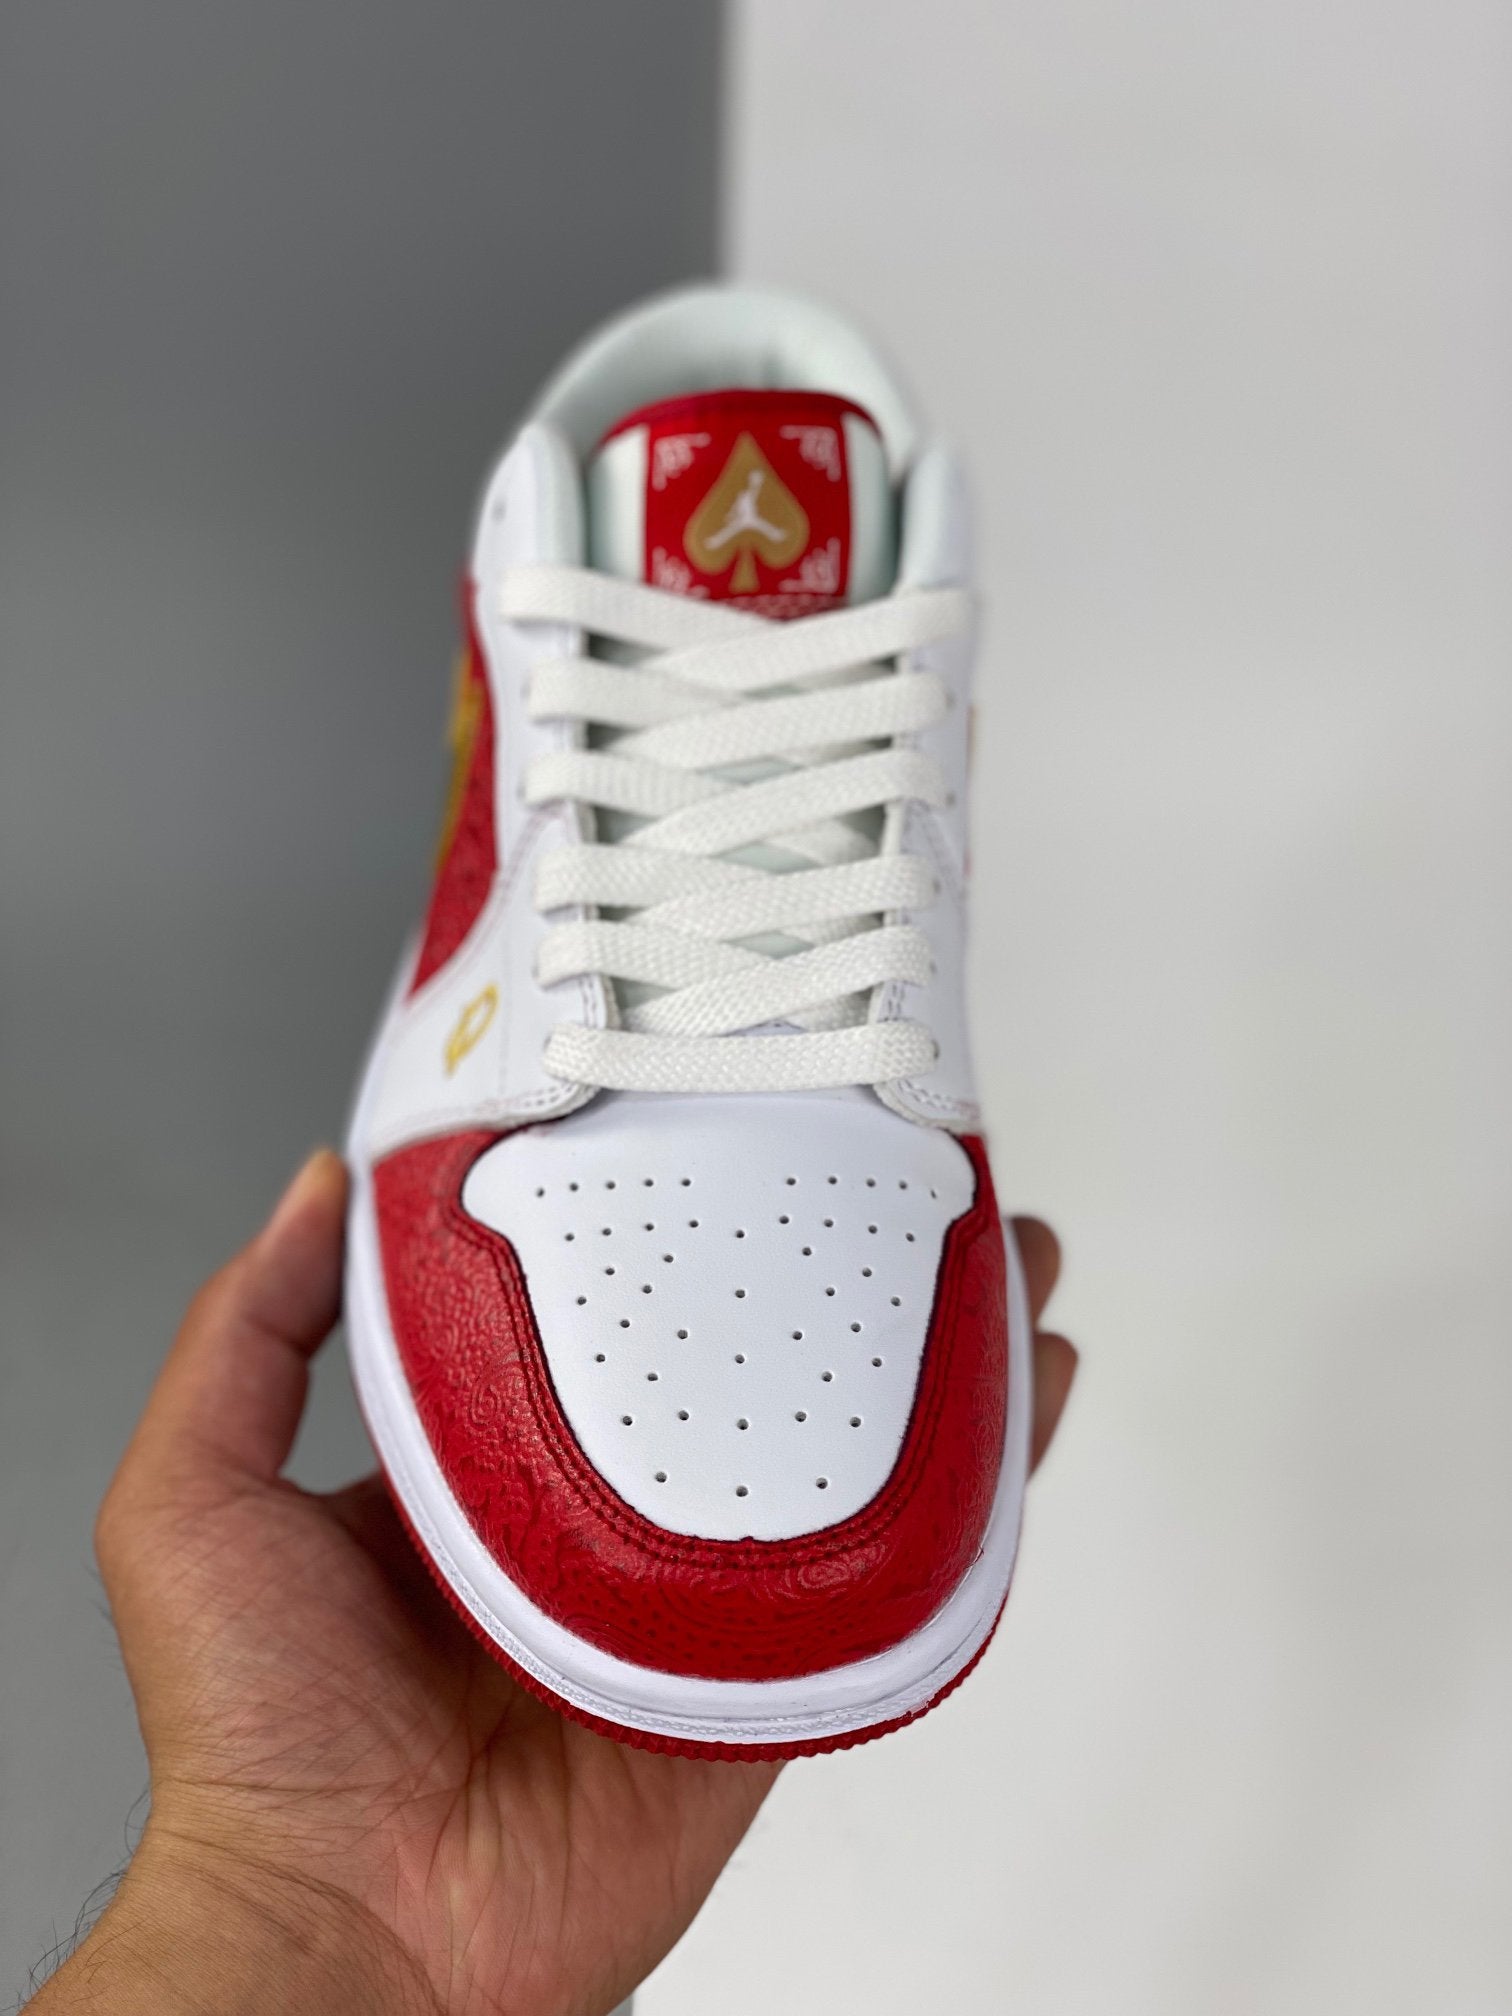 Nike Air Jordan 1 Low Spades Sneakers Shoes from